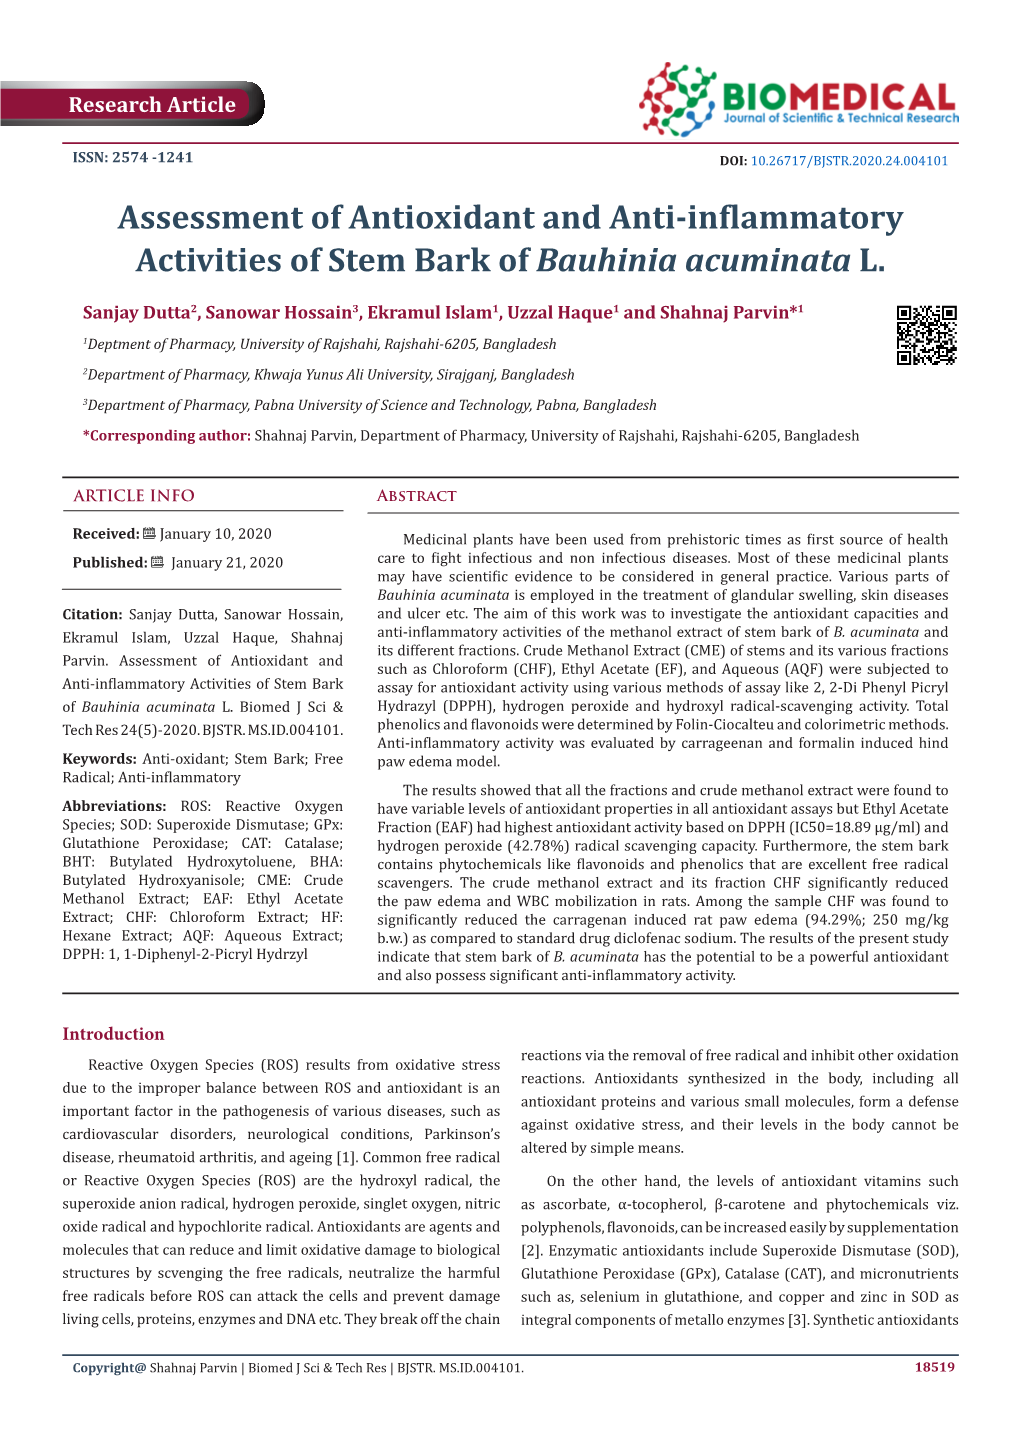 Assessment of Antioxidant and Anti-Inflammatory Activities of Stem Bark of Bauhinia Acuminata L